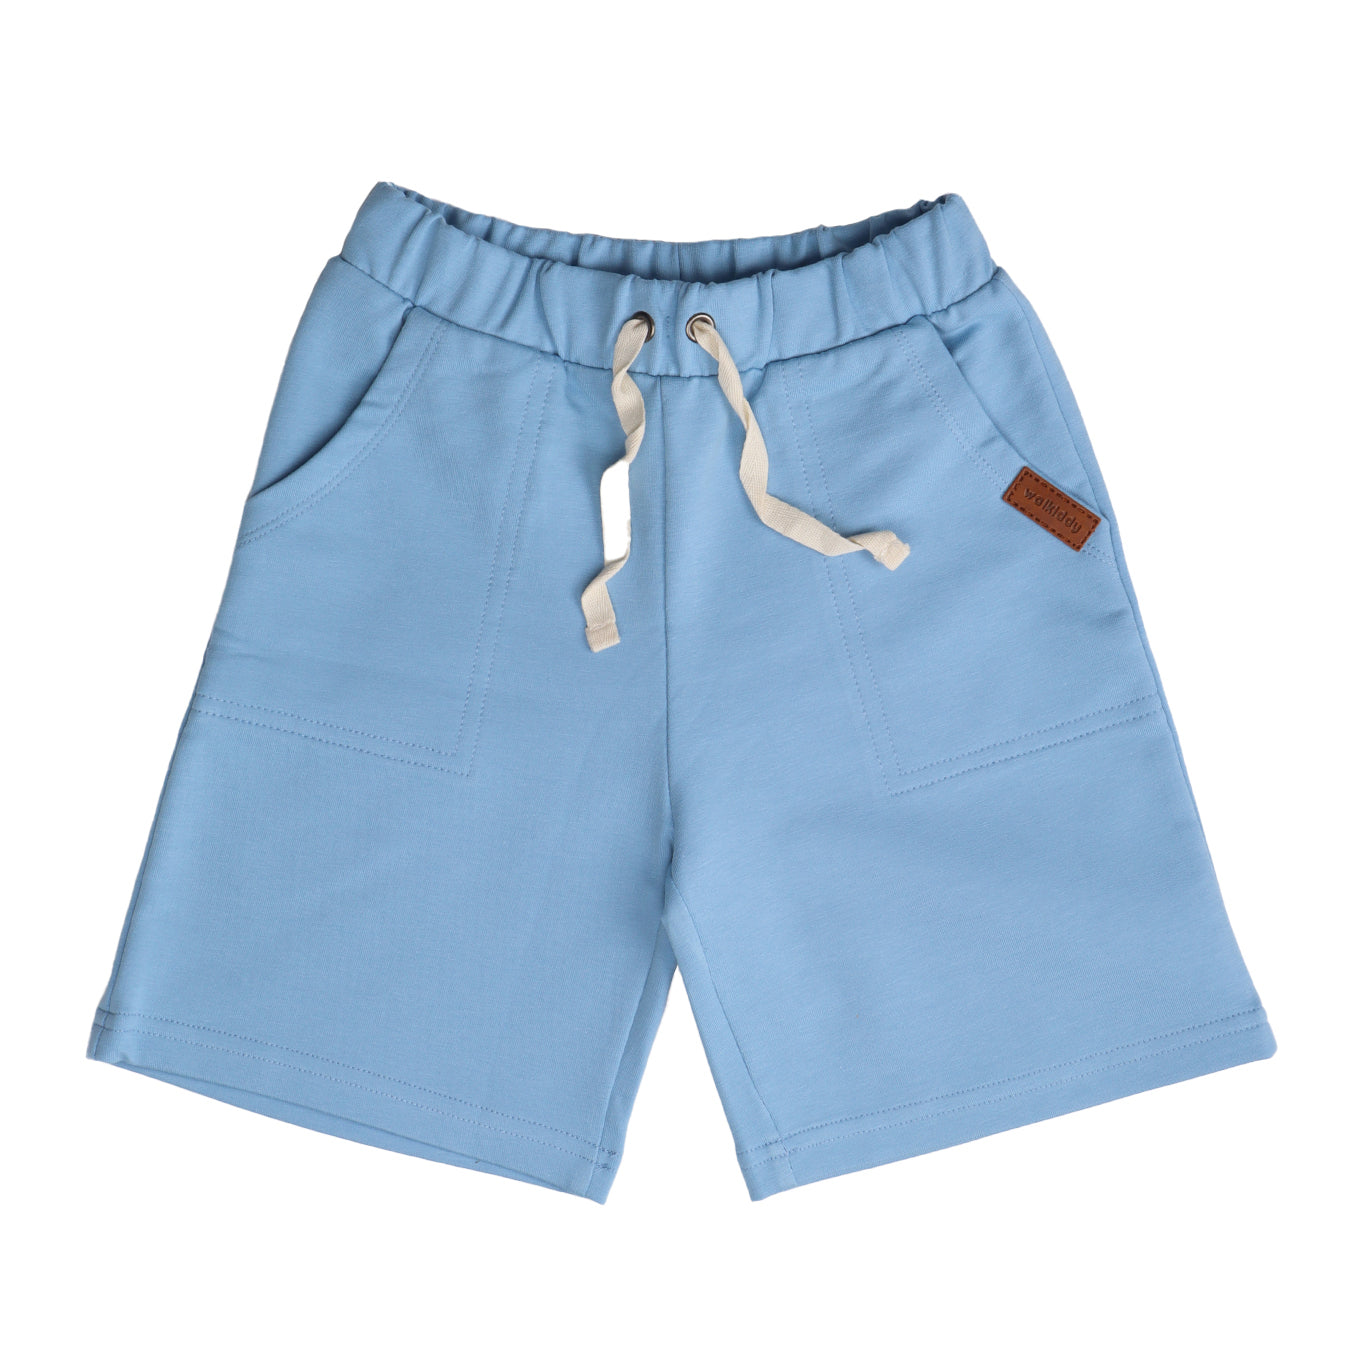 Walkiddy organic Shorts- tranquil blue